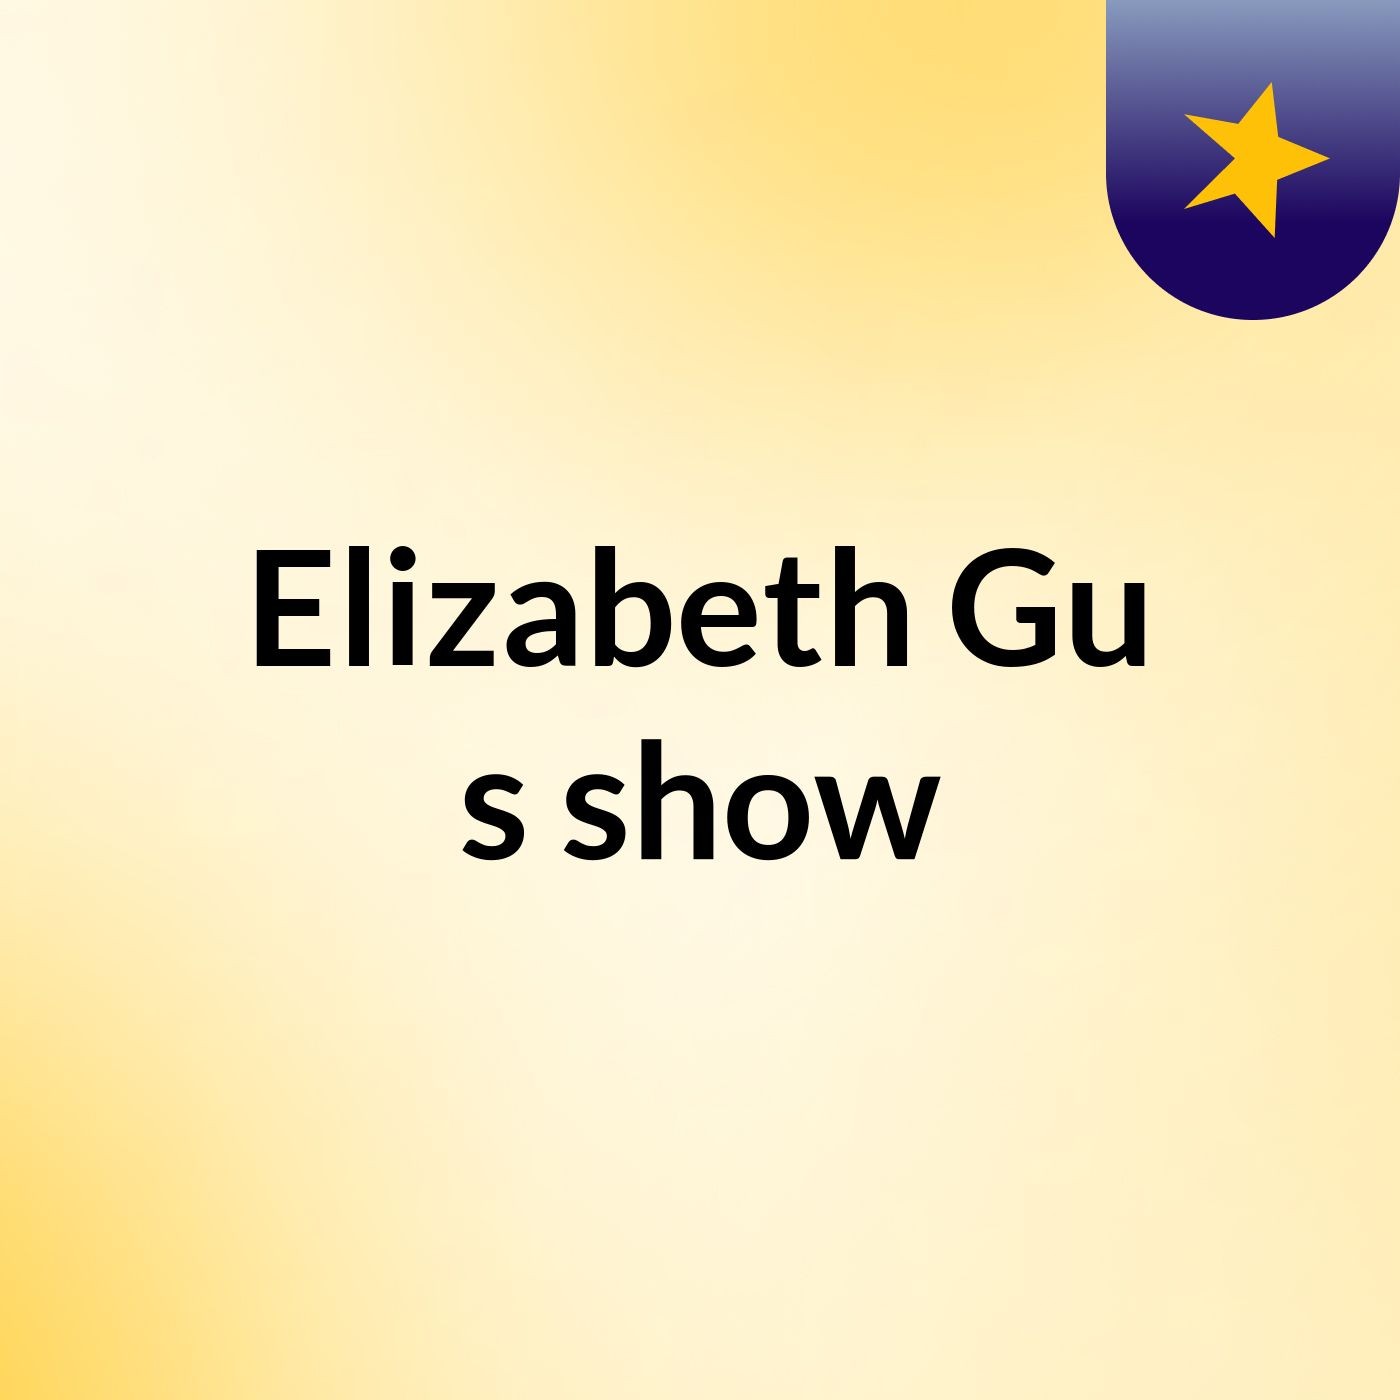 Elizabeth Gu's show